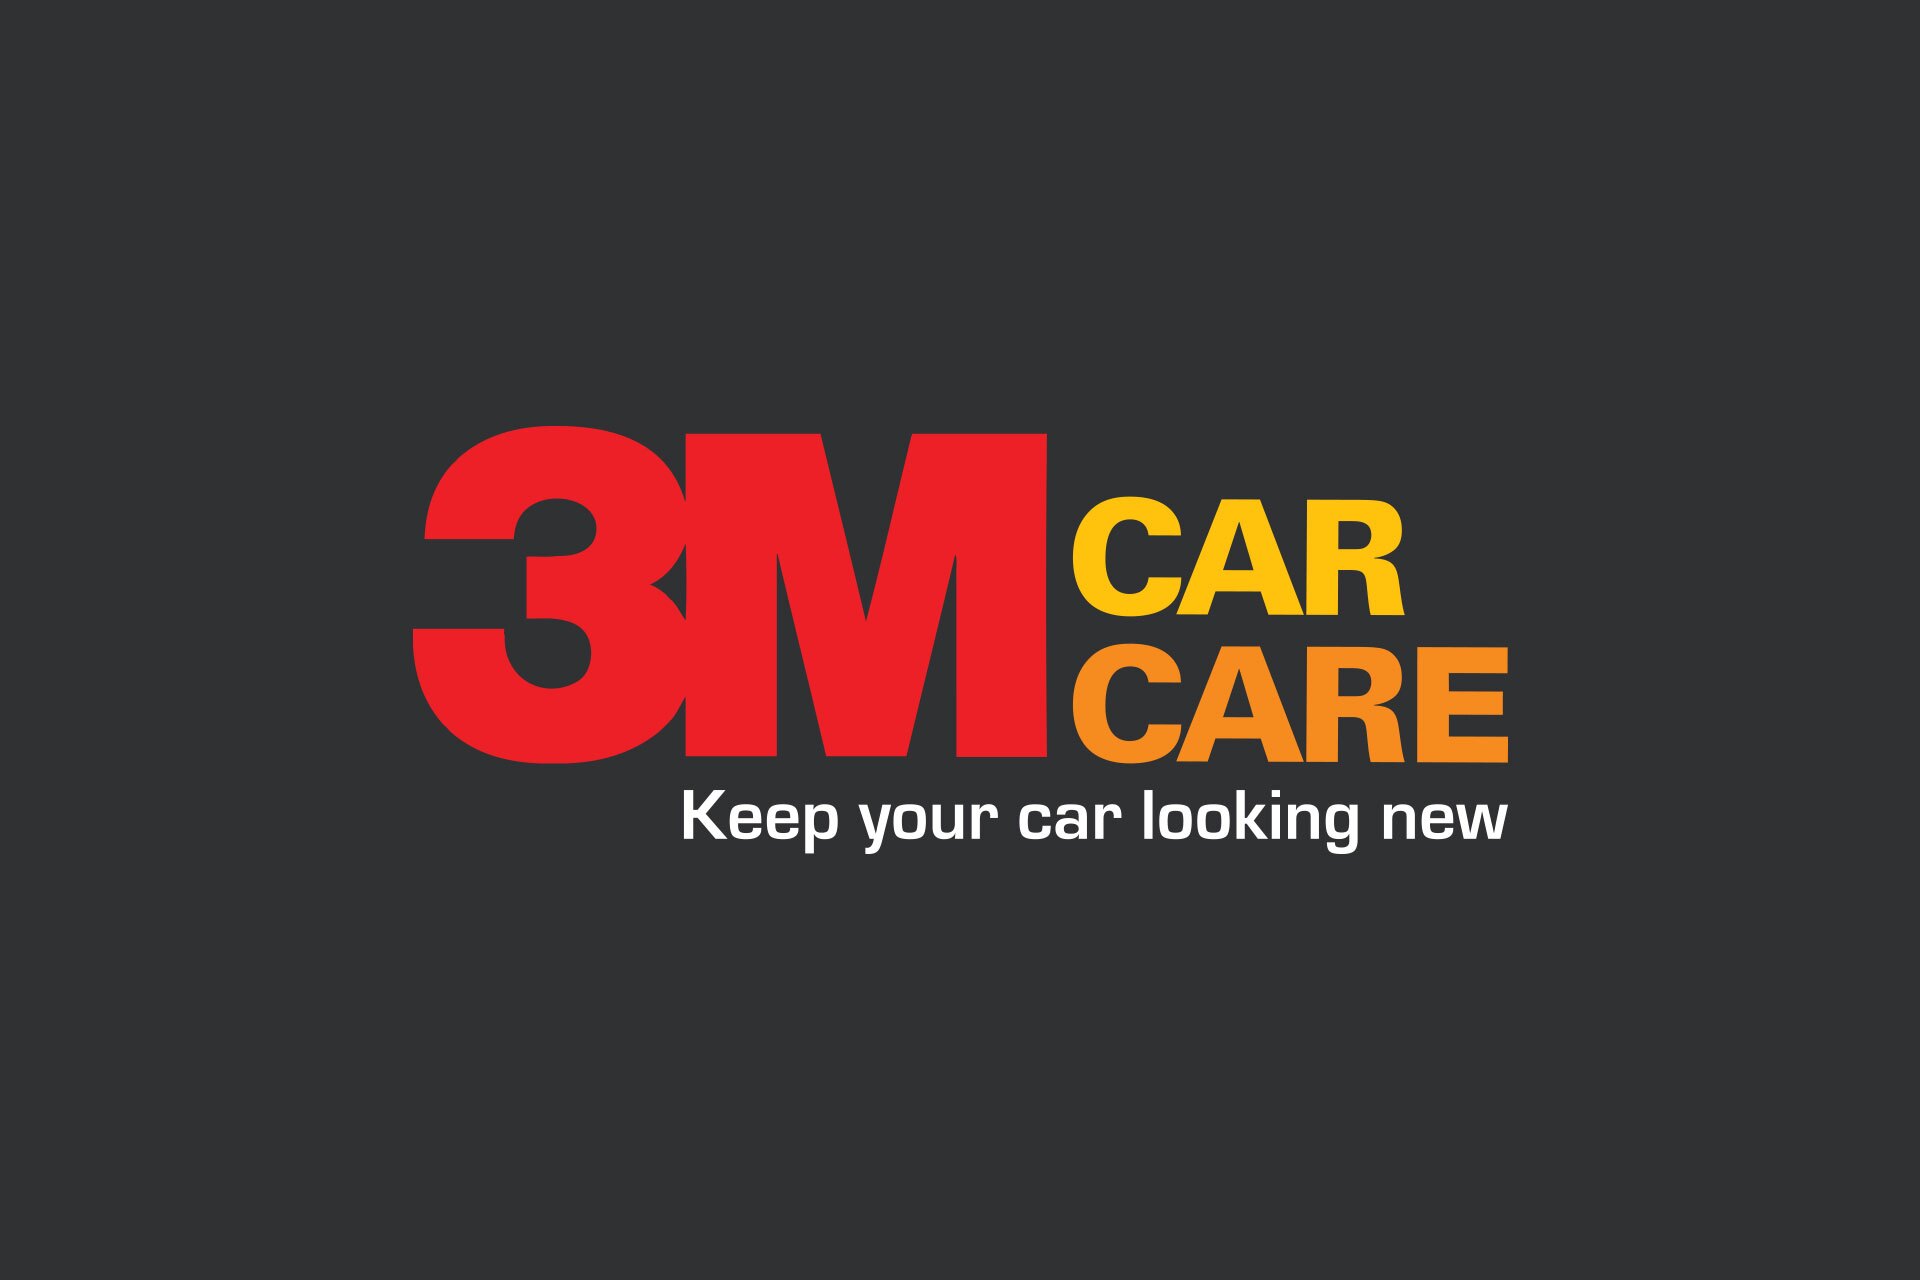 3M Car Care: Innovation in Automotive Service